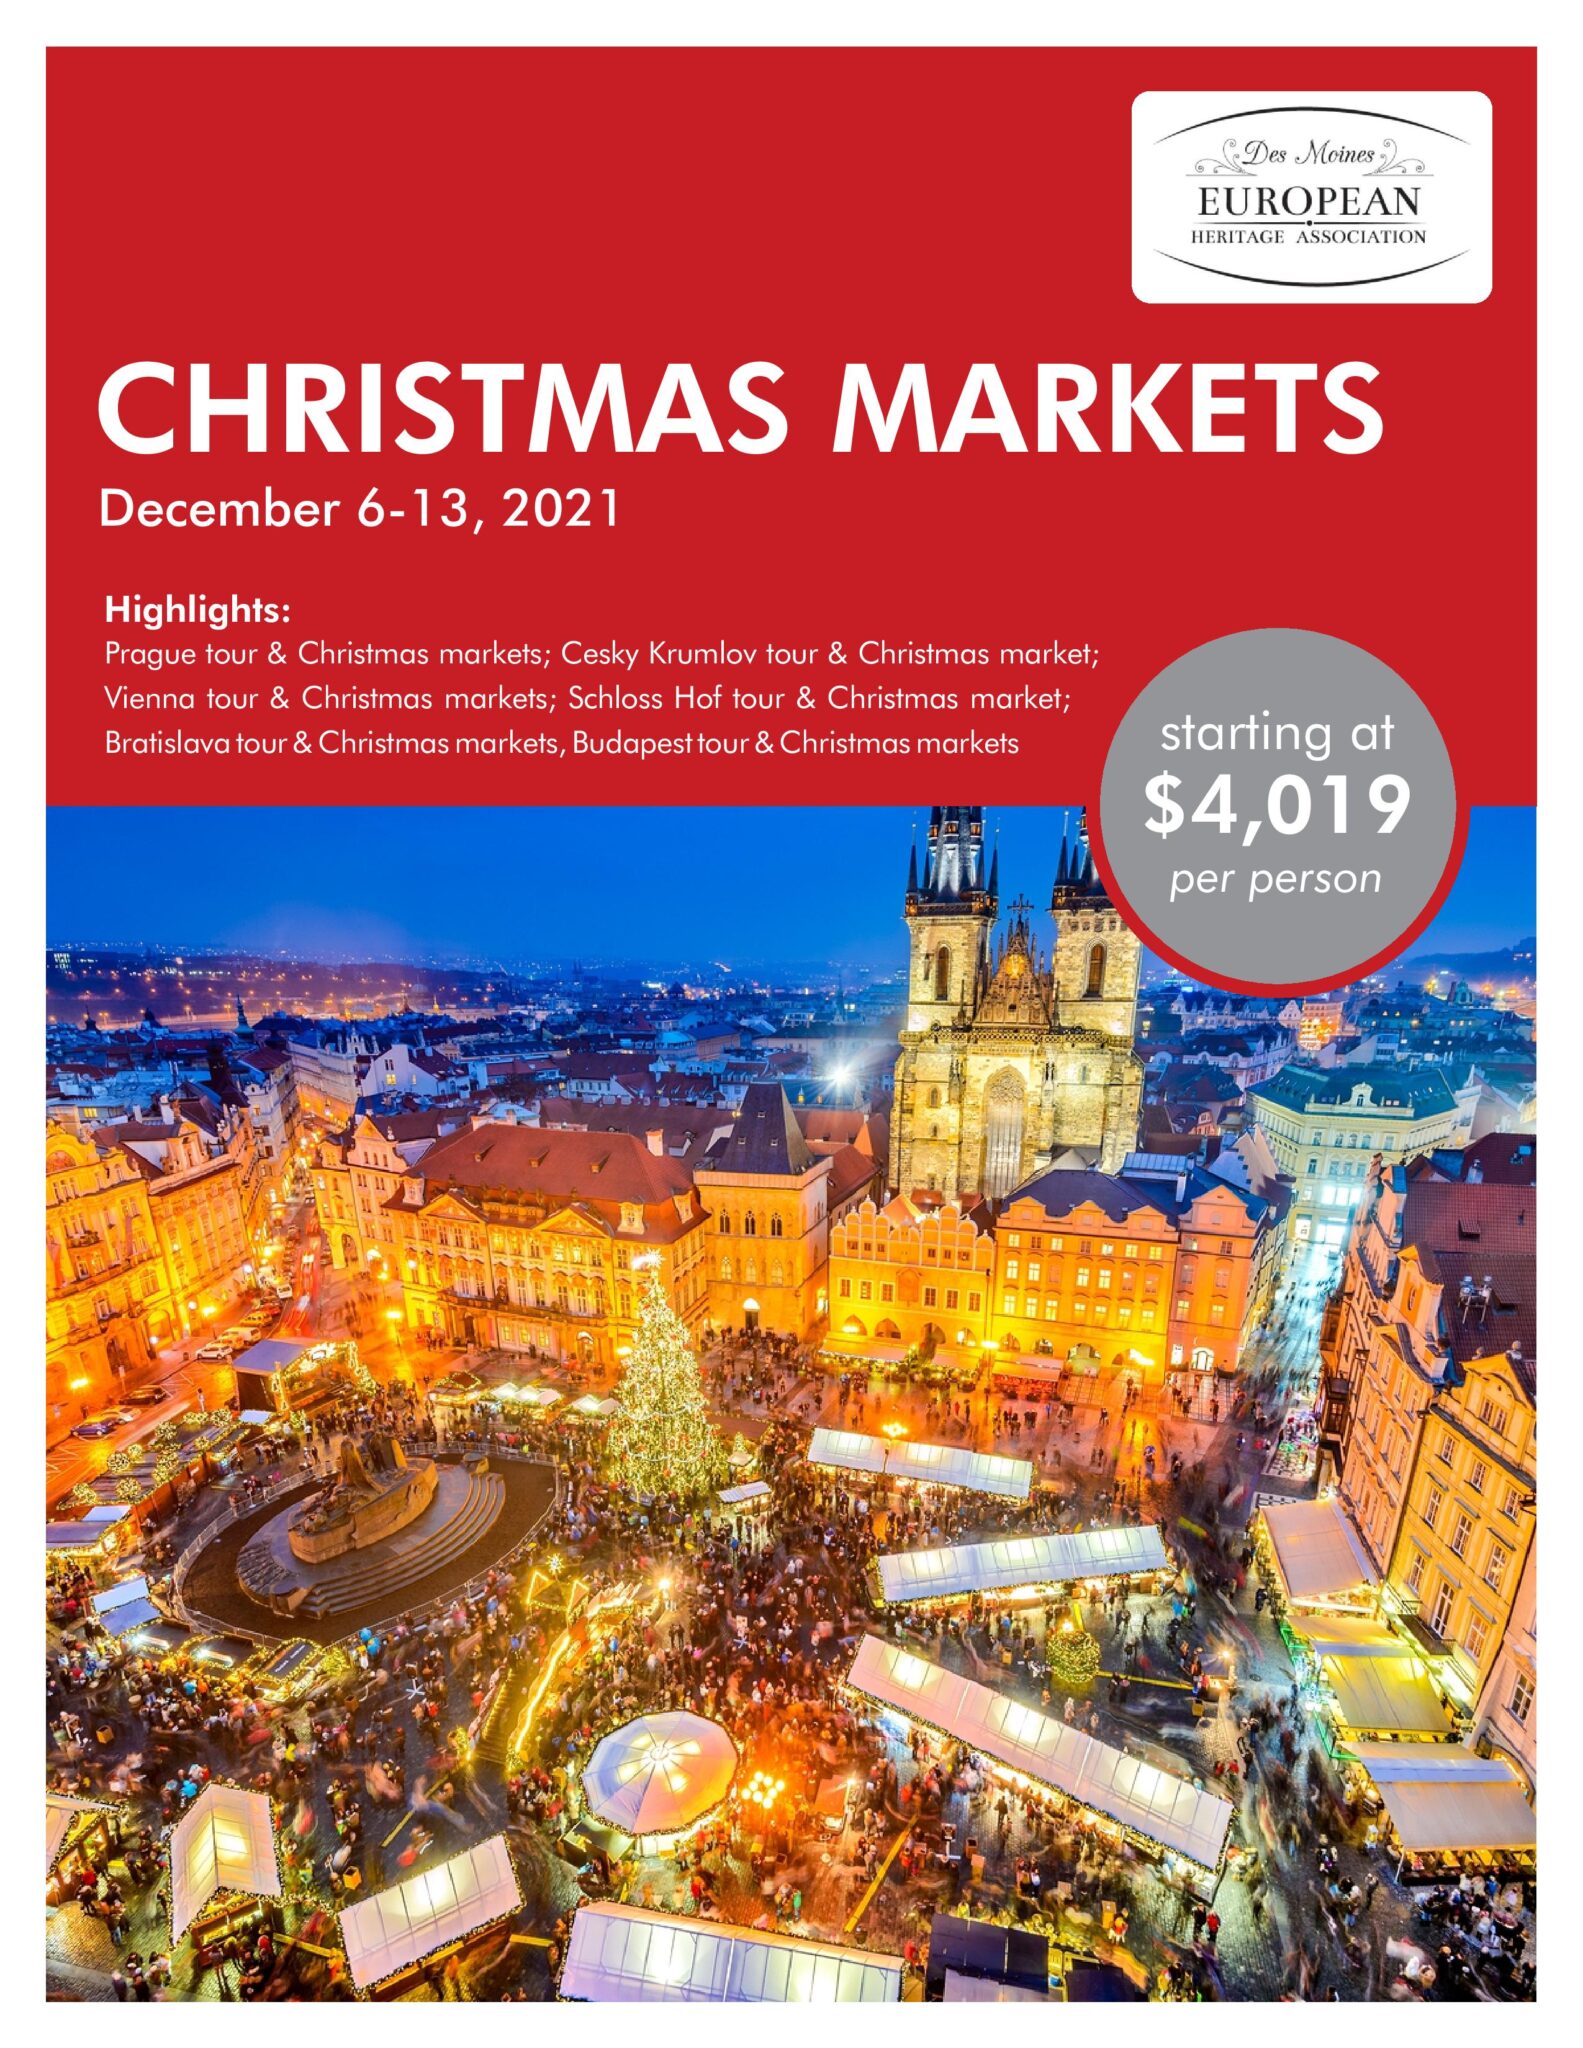 Virtual Travel Show Visit European Christmas Markets in